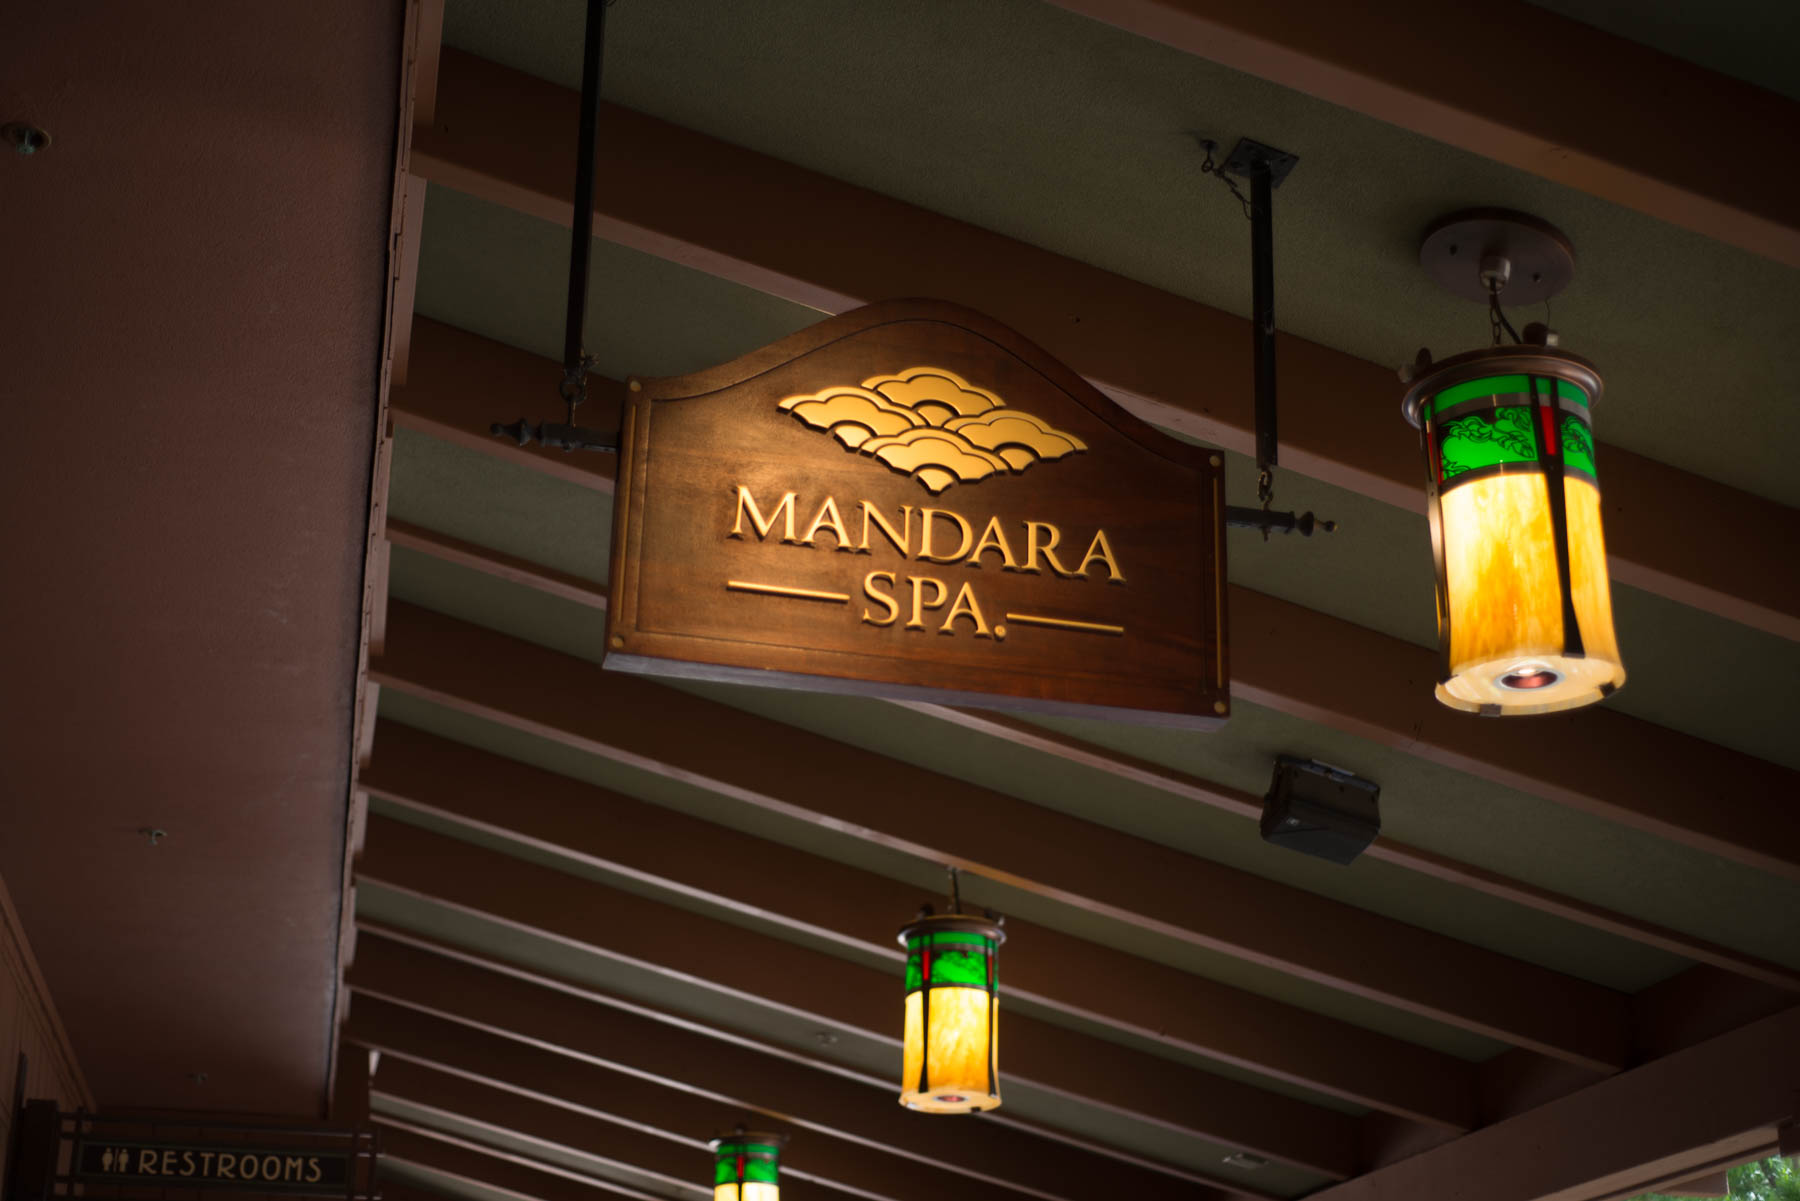 Mandara Spa Sign at the Grand Californian Hotel -Disneyland Hotel Activities for Adults